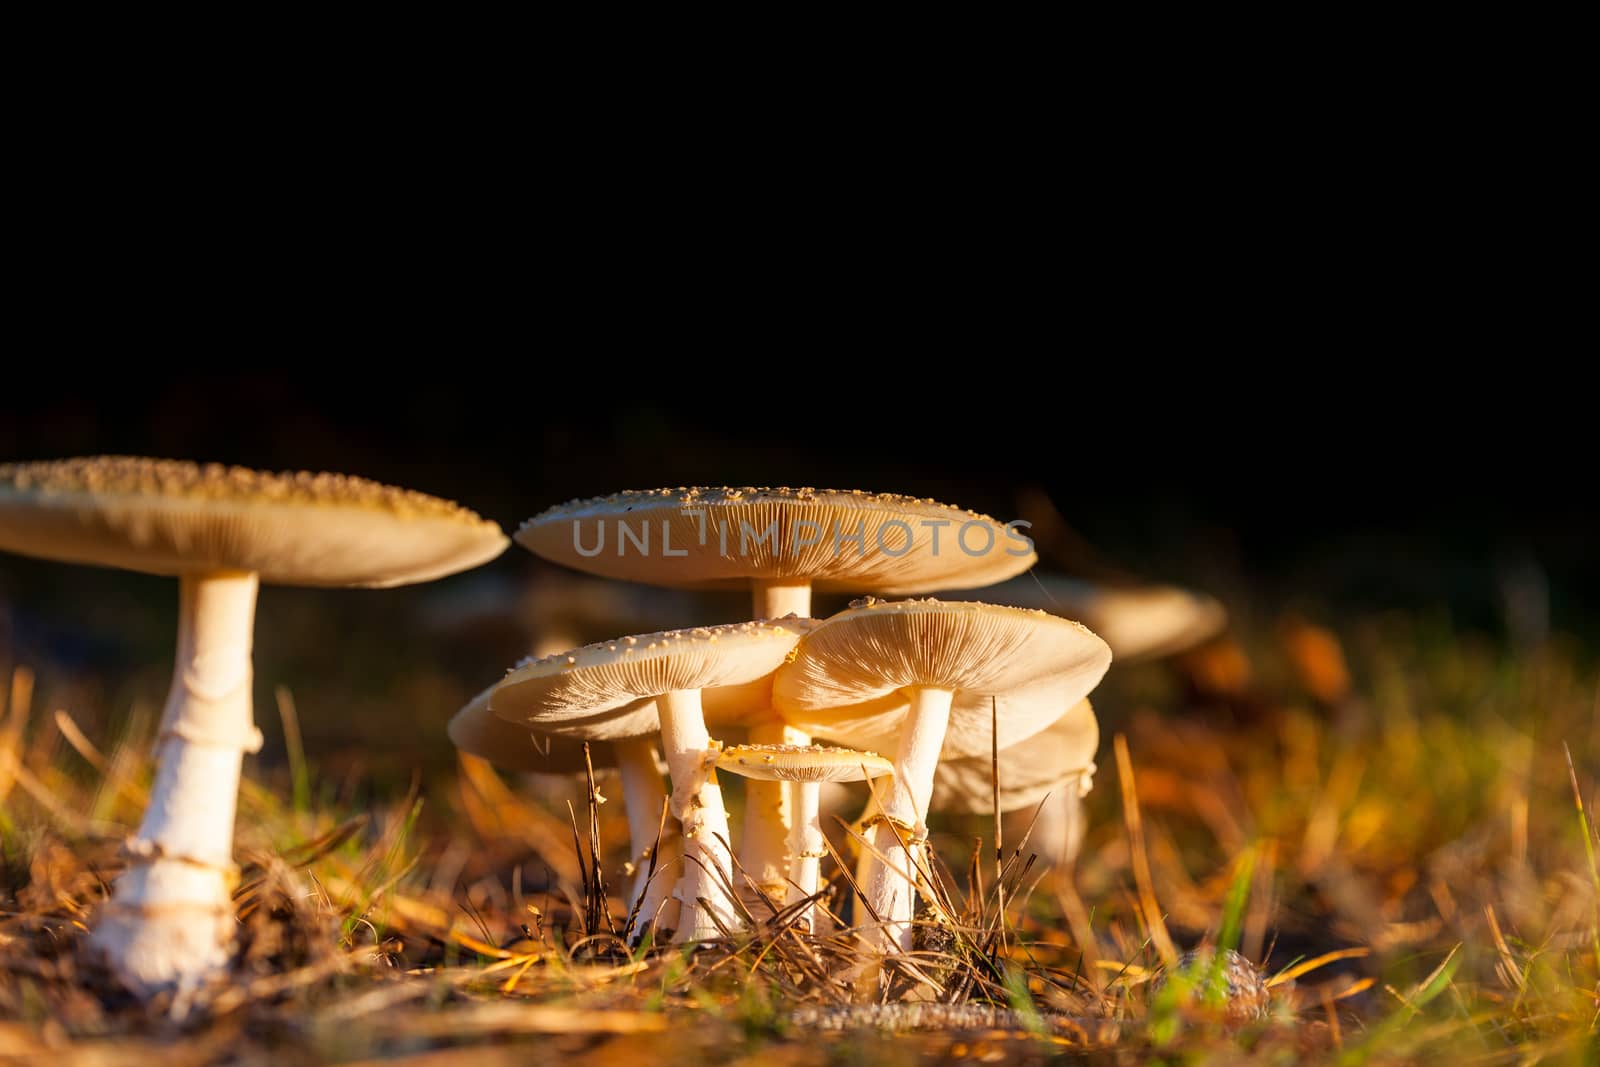 Mushroom or fungi.Parasol Mushroom